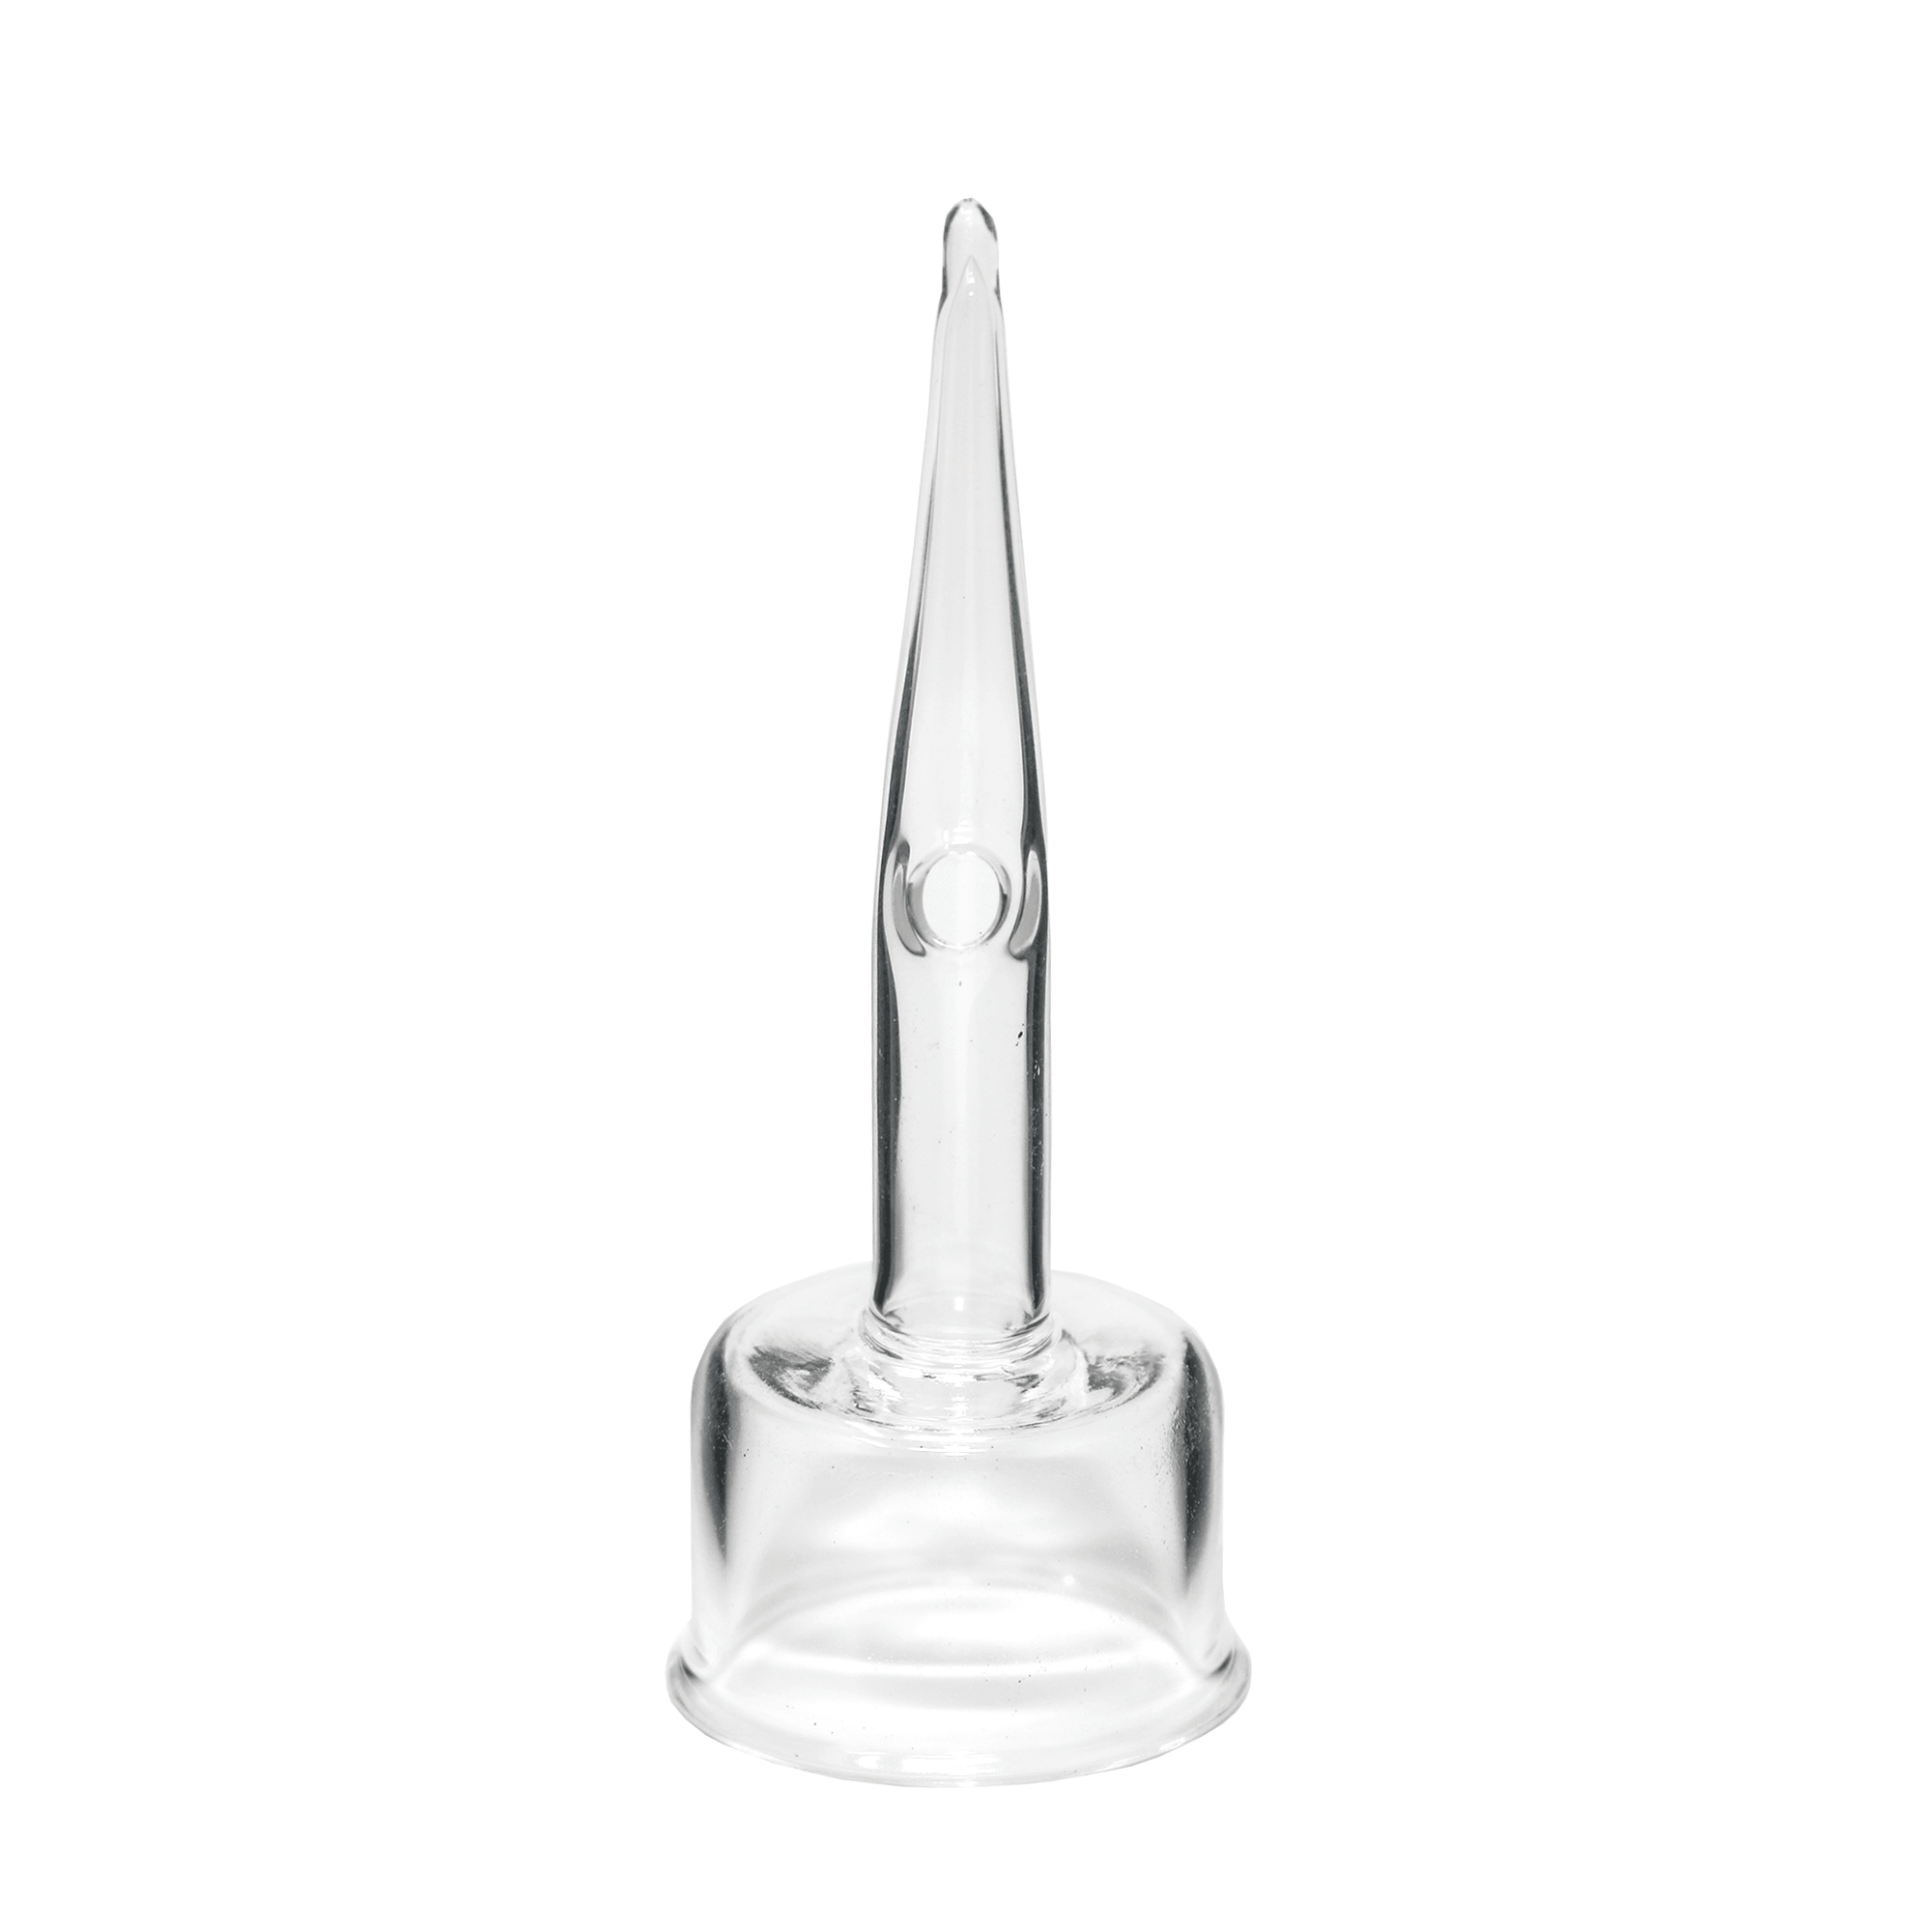 Dabbing Kit | Showerhead Bubbler and Hybrid Quartz Nail | Glass Dabber Tool View | TDS